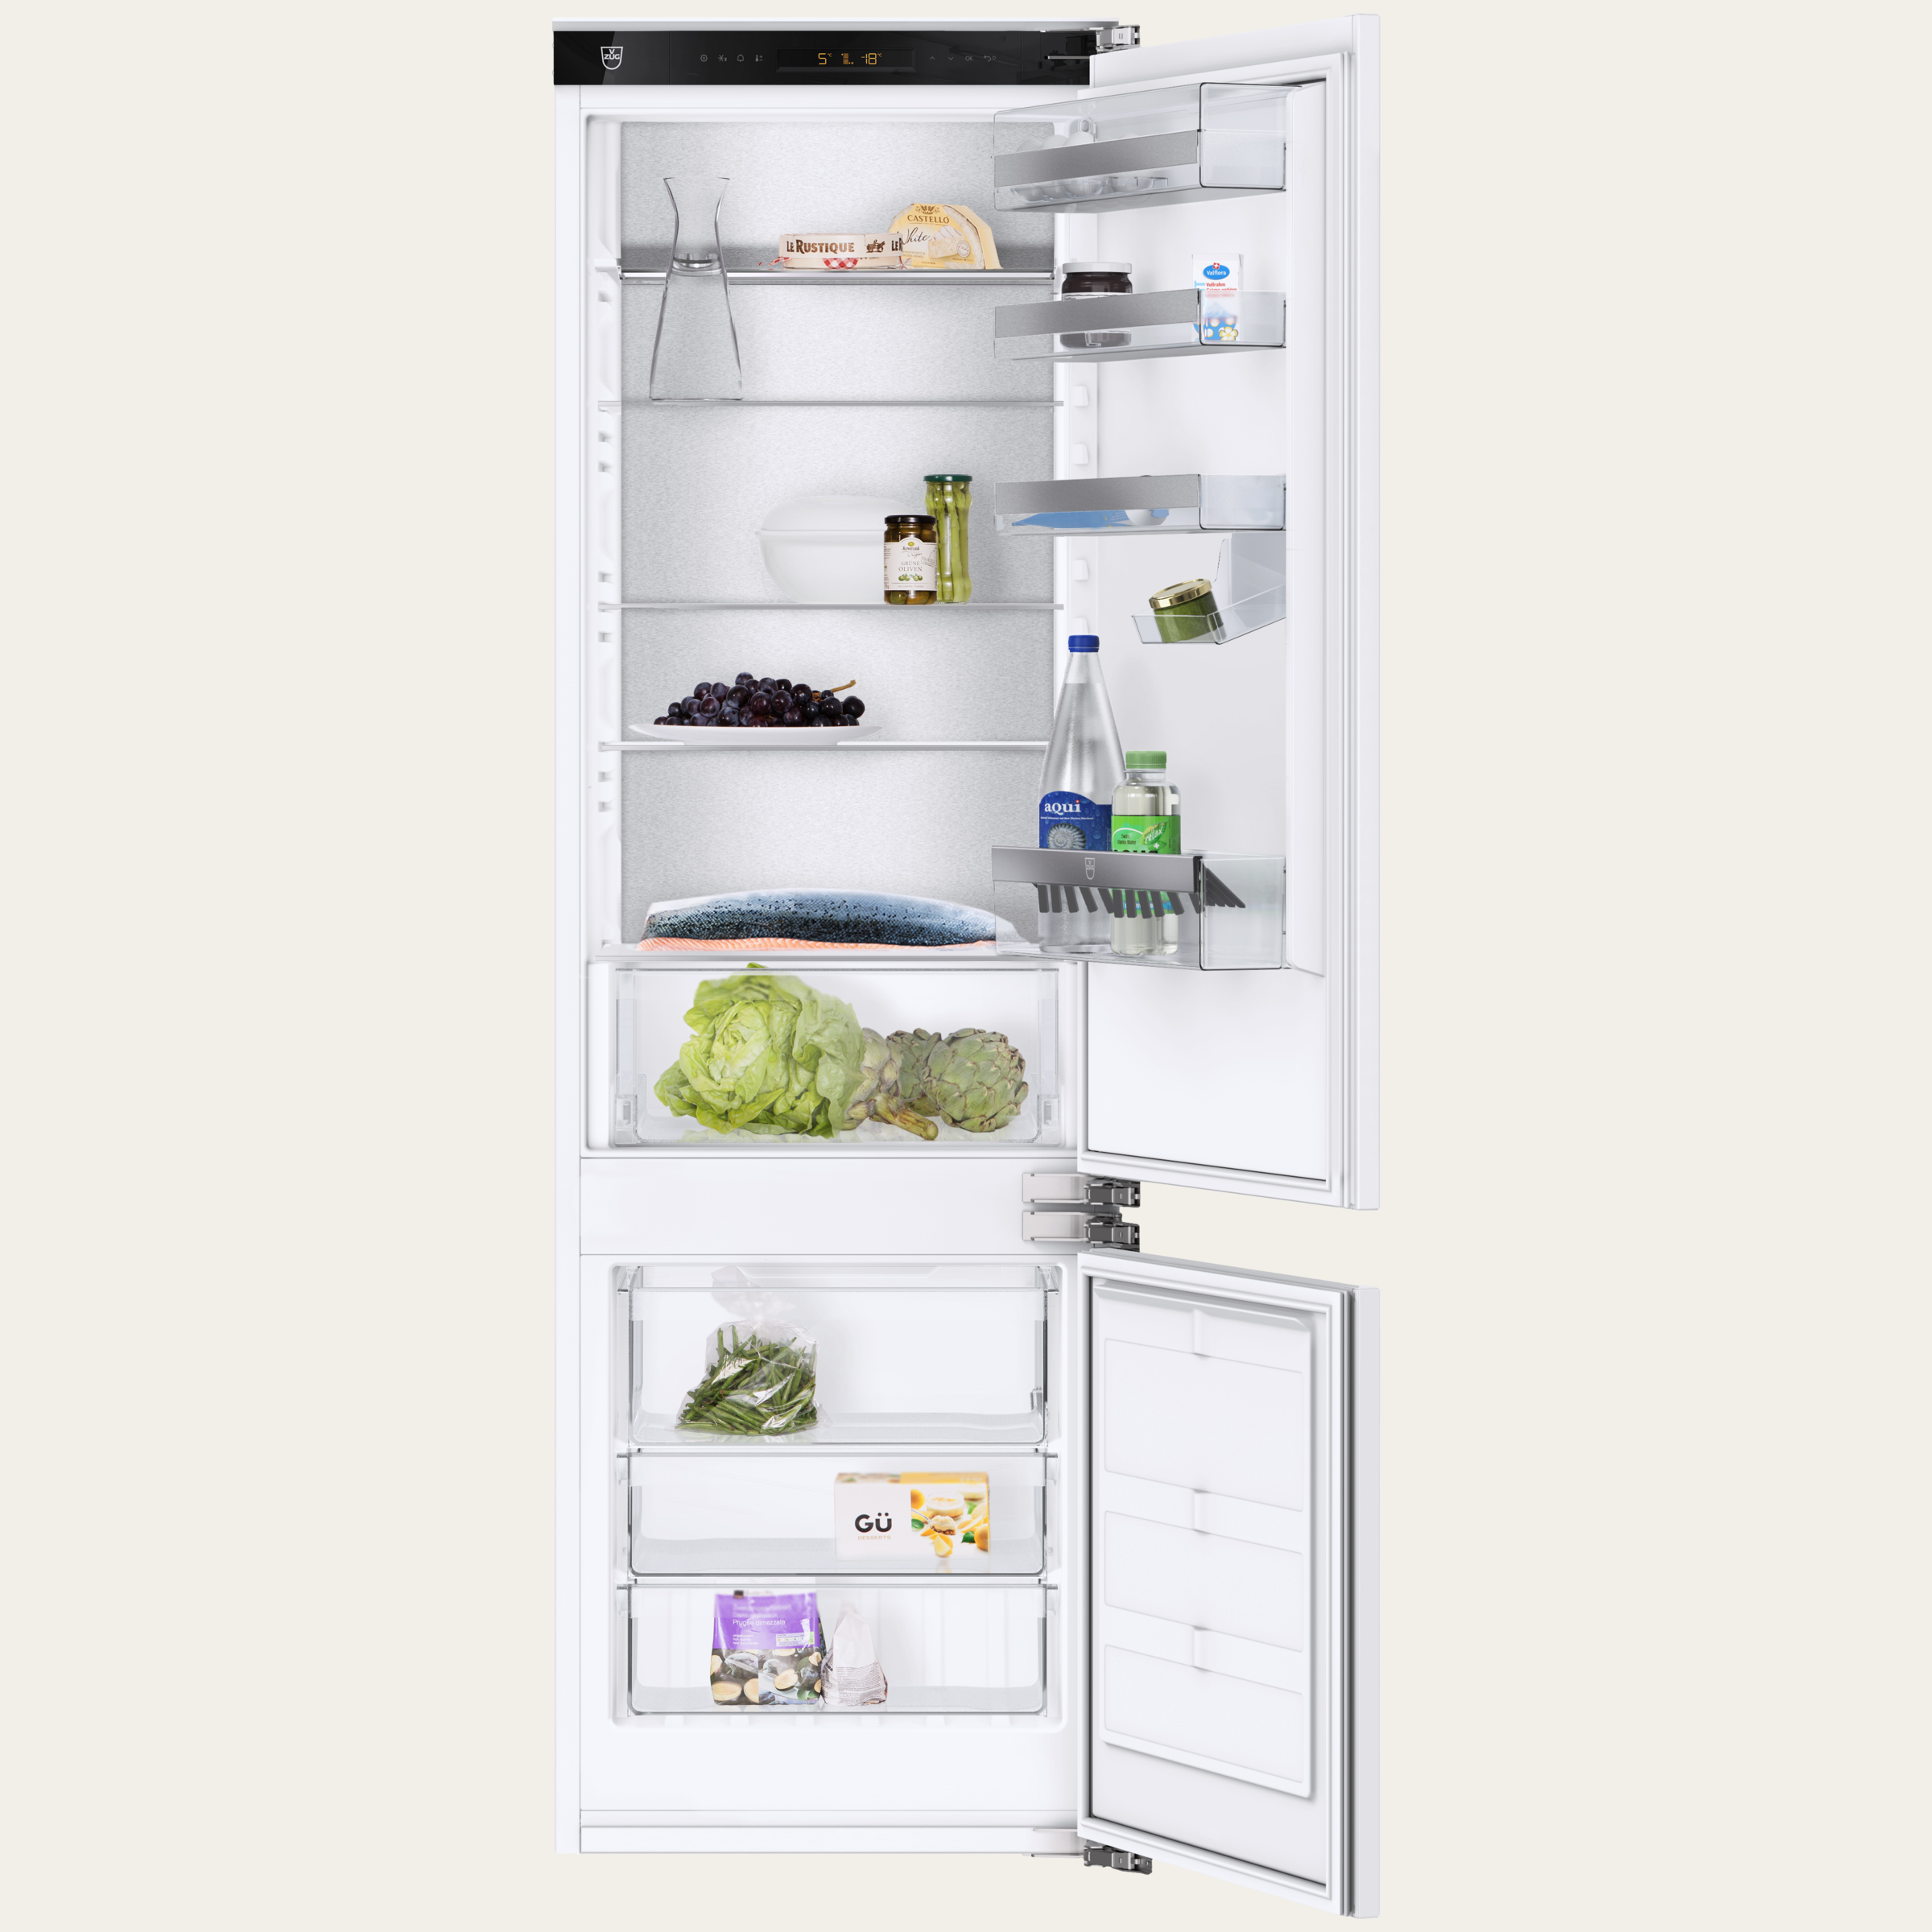 V-ZUG Refrigerators, CombiCooler V4000 178NI, Standard width: 60 cm, Standard height: 177.8 cm, Fully integratable, Door hinge: Right, TouchControl, Bottom box, NoFrost, Fresh control zone